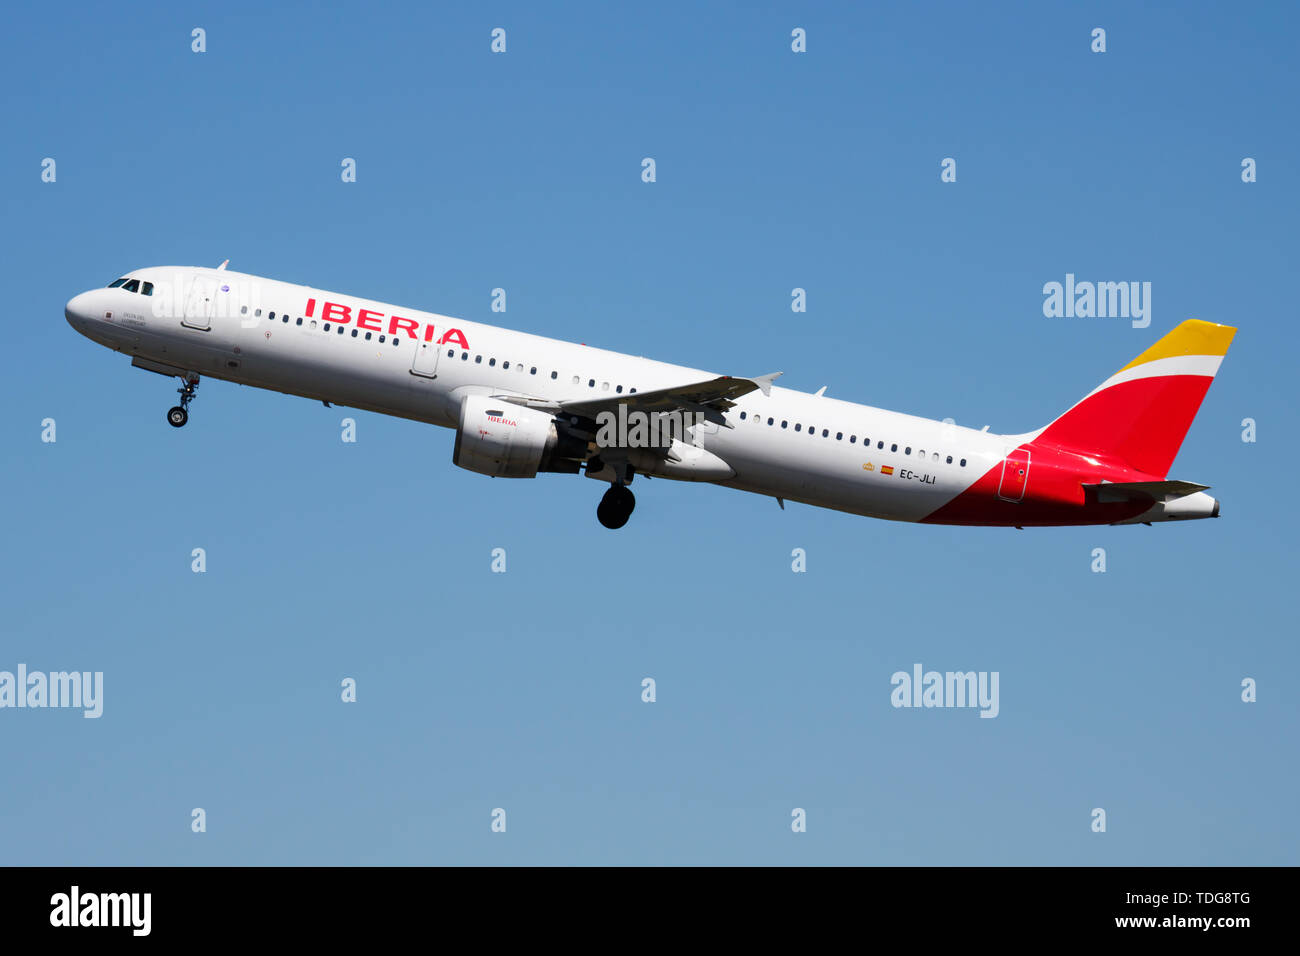 MADRID / SPAIN - MAY 1, 2016: Iberia Airlines Airbus A321 EC-JLI passenger plane departure at Madrid Barajas Airport Stock Photo